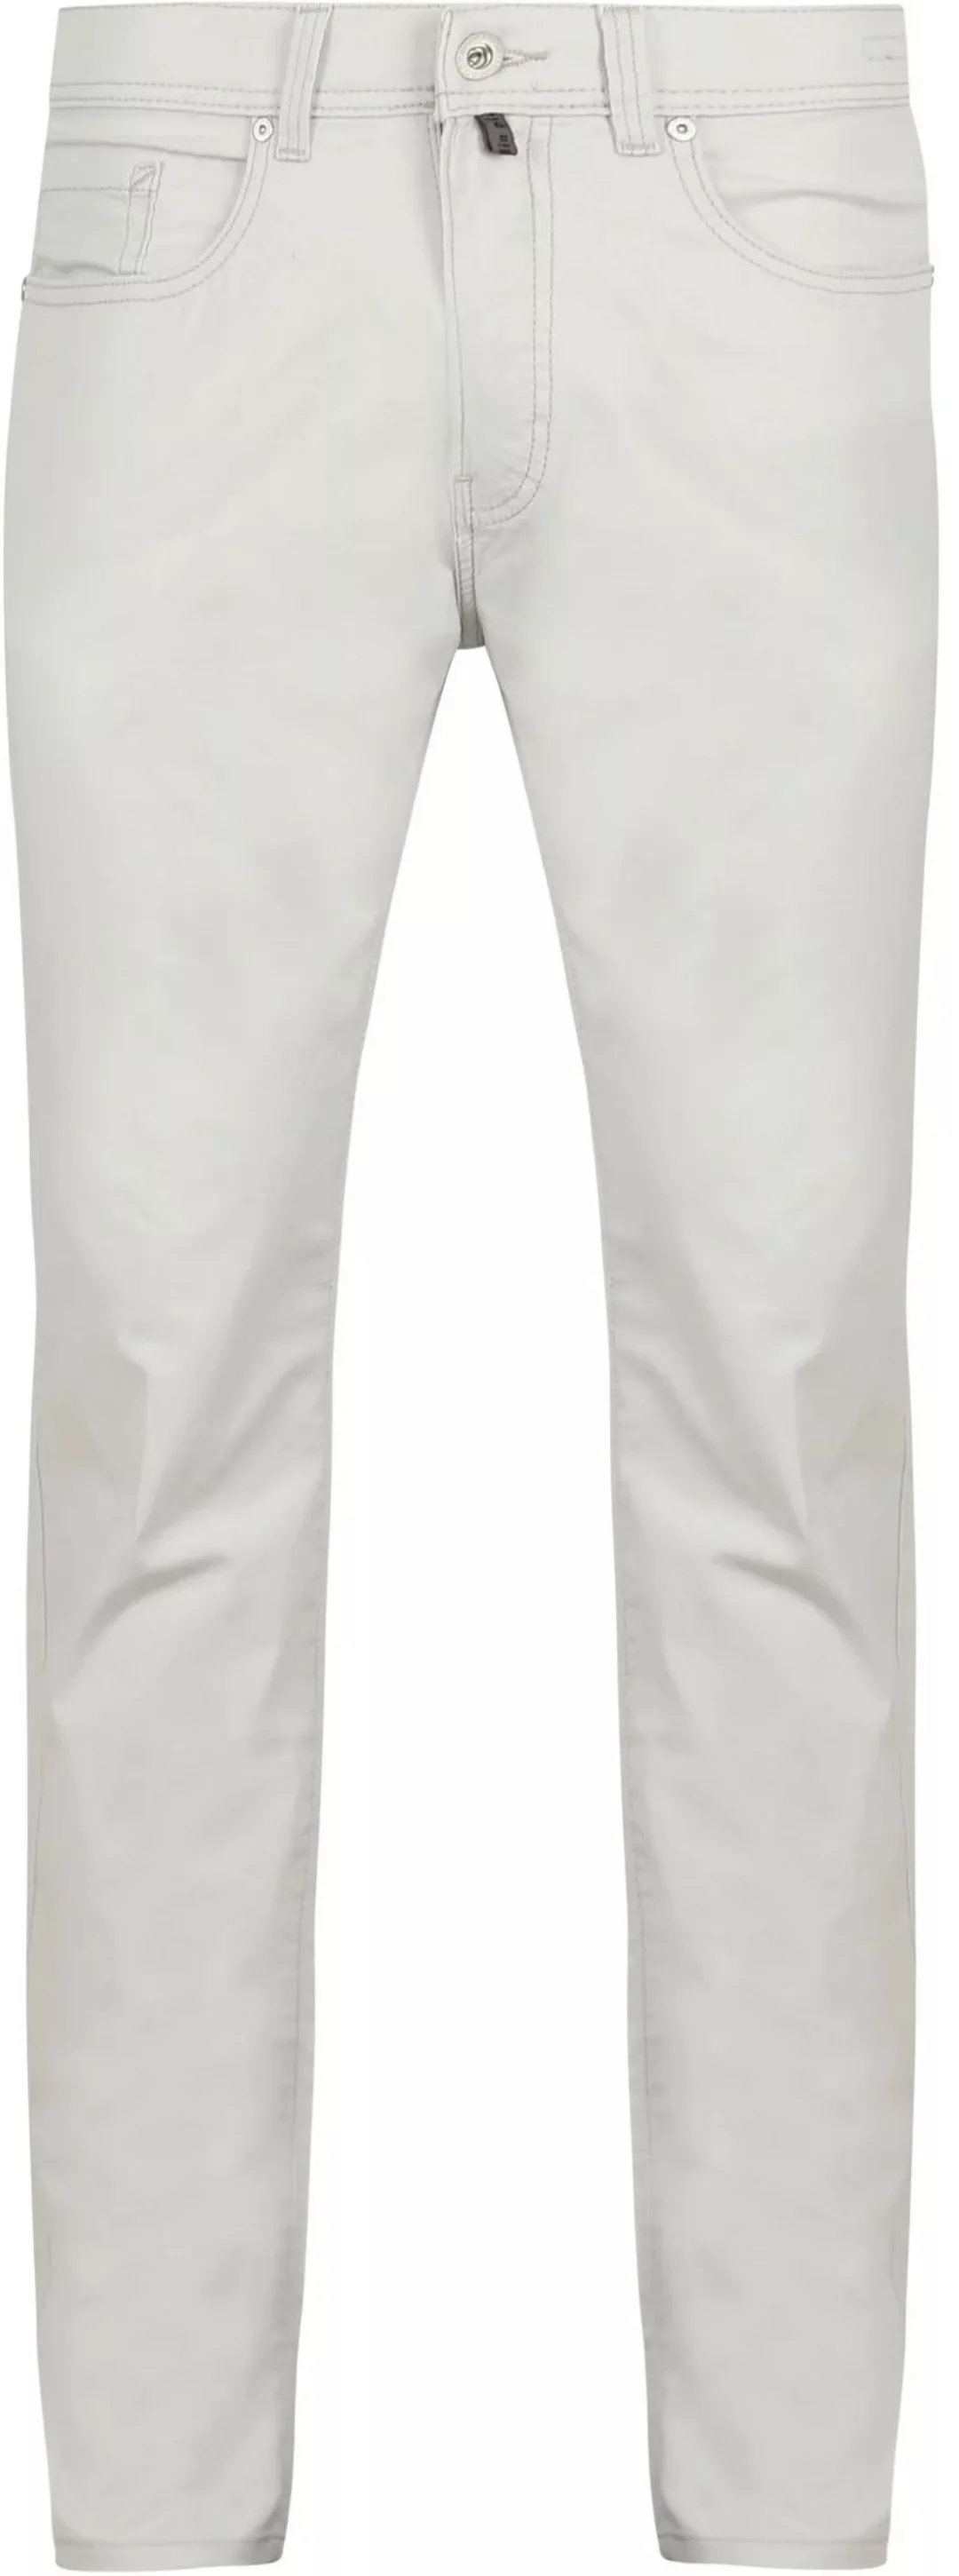 Pierre Cardin Trousers Lyon Tapered Hellgrau - Größe W 34 - L 32 günstig online kaufen